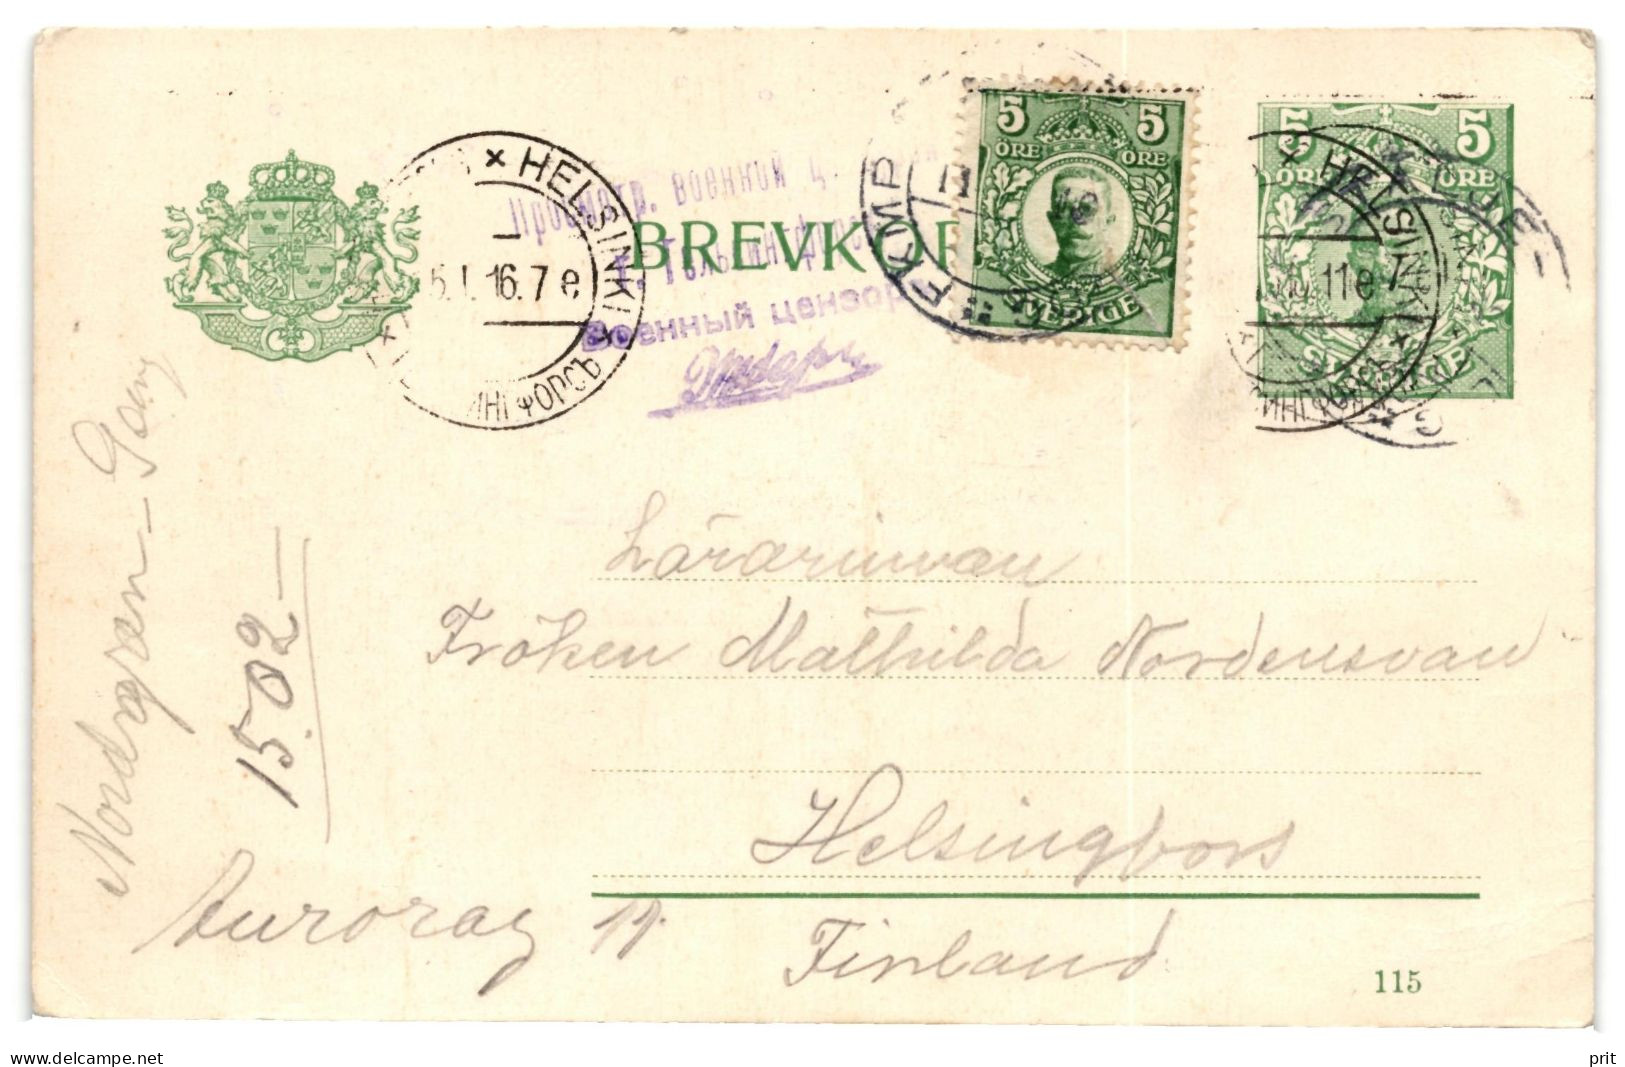 Helsinki Helsingfors WW1 Rare Finland Russian Government Military Censor Cancel 1917 On Swedish Postal Stationery Card - Militair